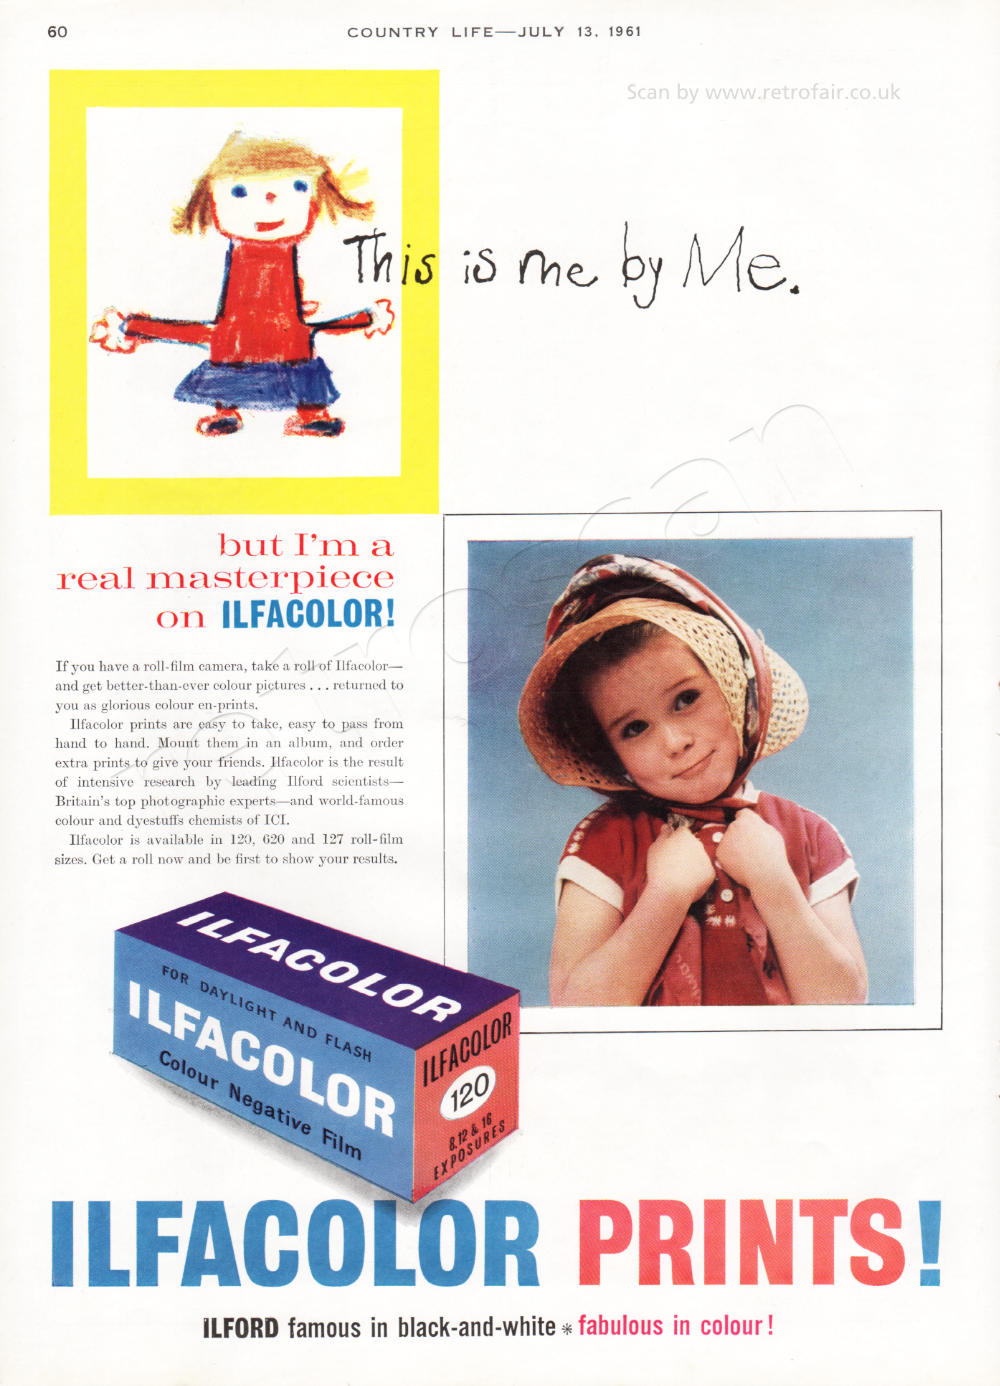  1961 Ilford Colour Prints - unframed vintage ad